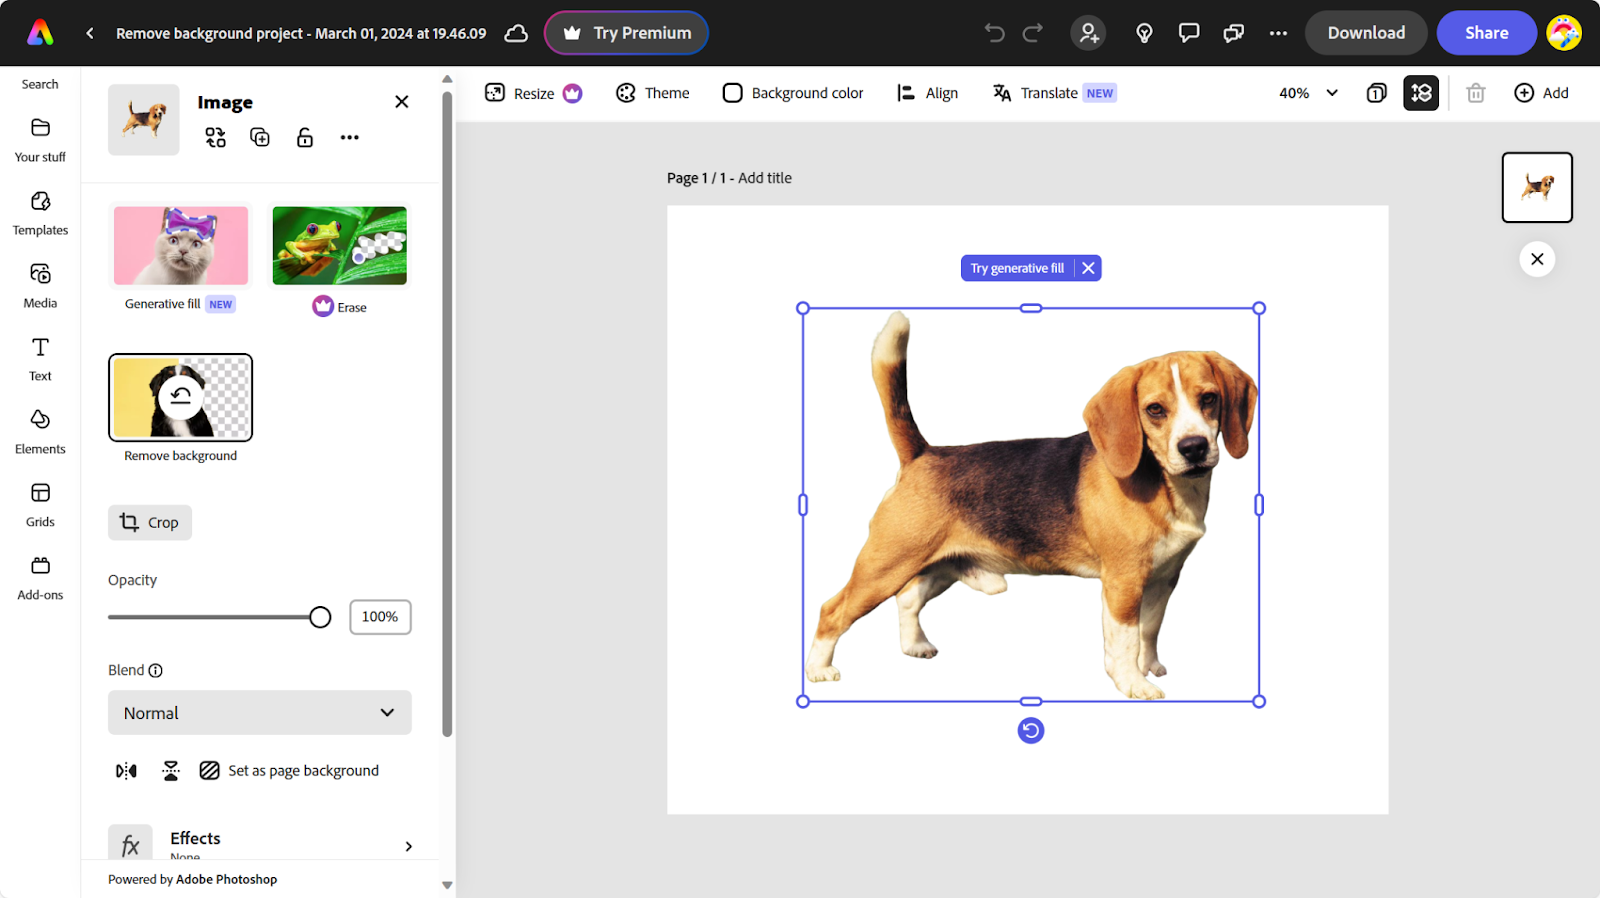 add a new dog's background on Adobe Express